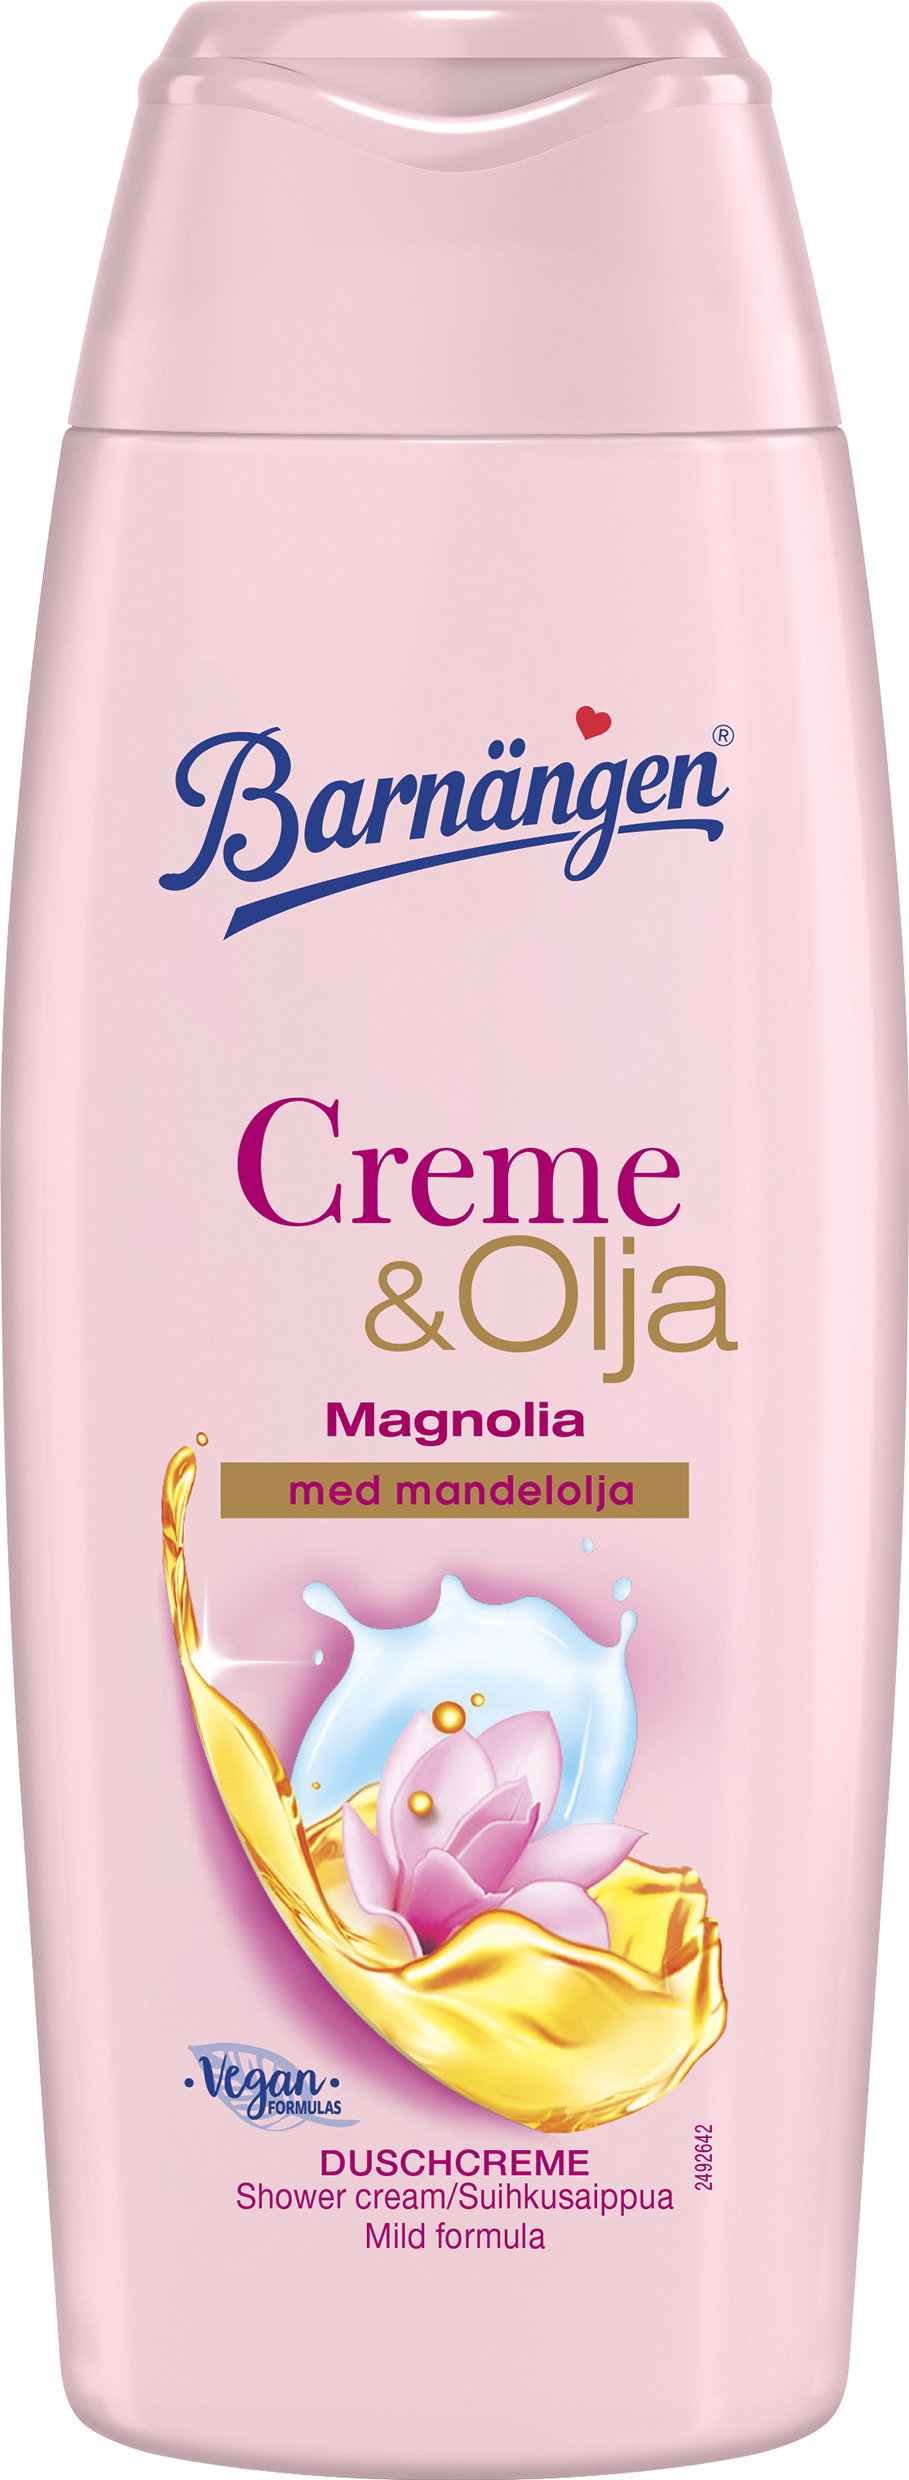 Barnängen Creme & Olja Magnolia Duschkräm 250 ml